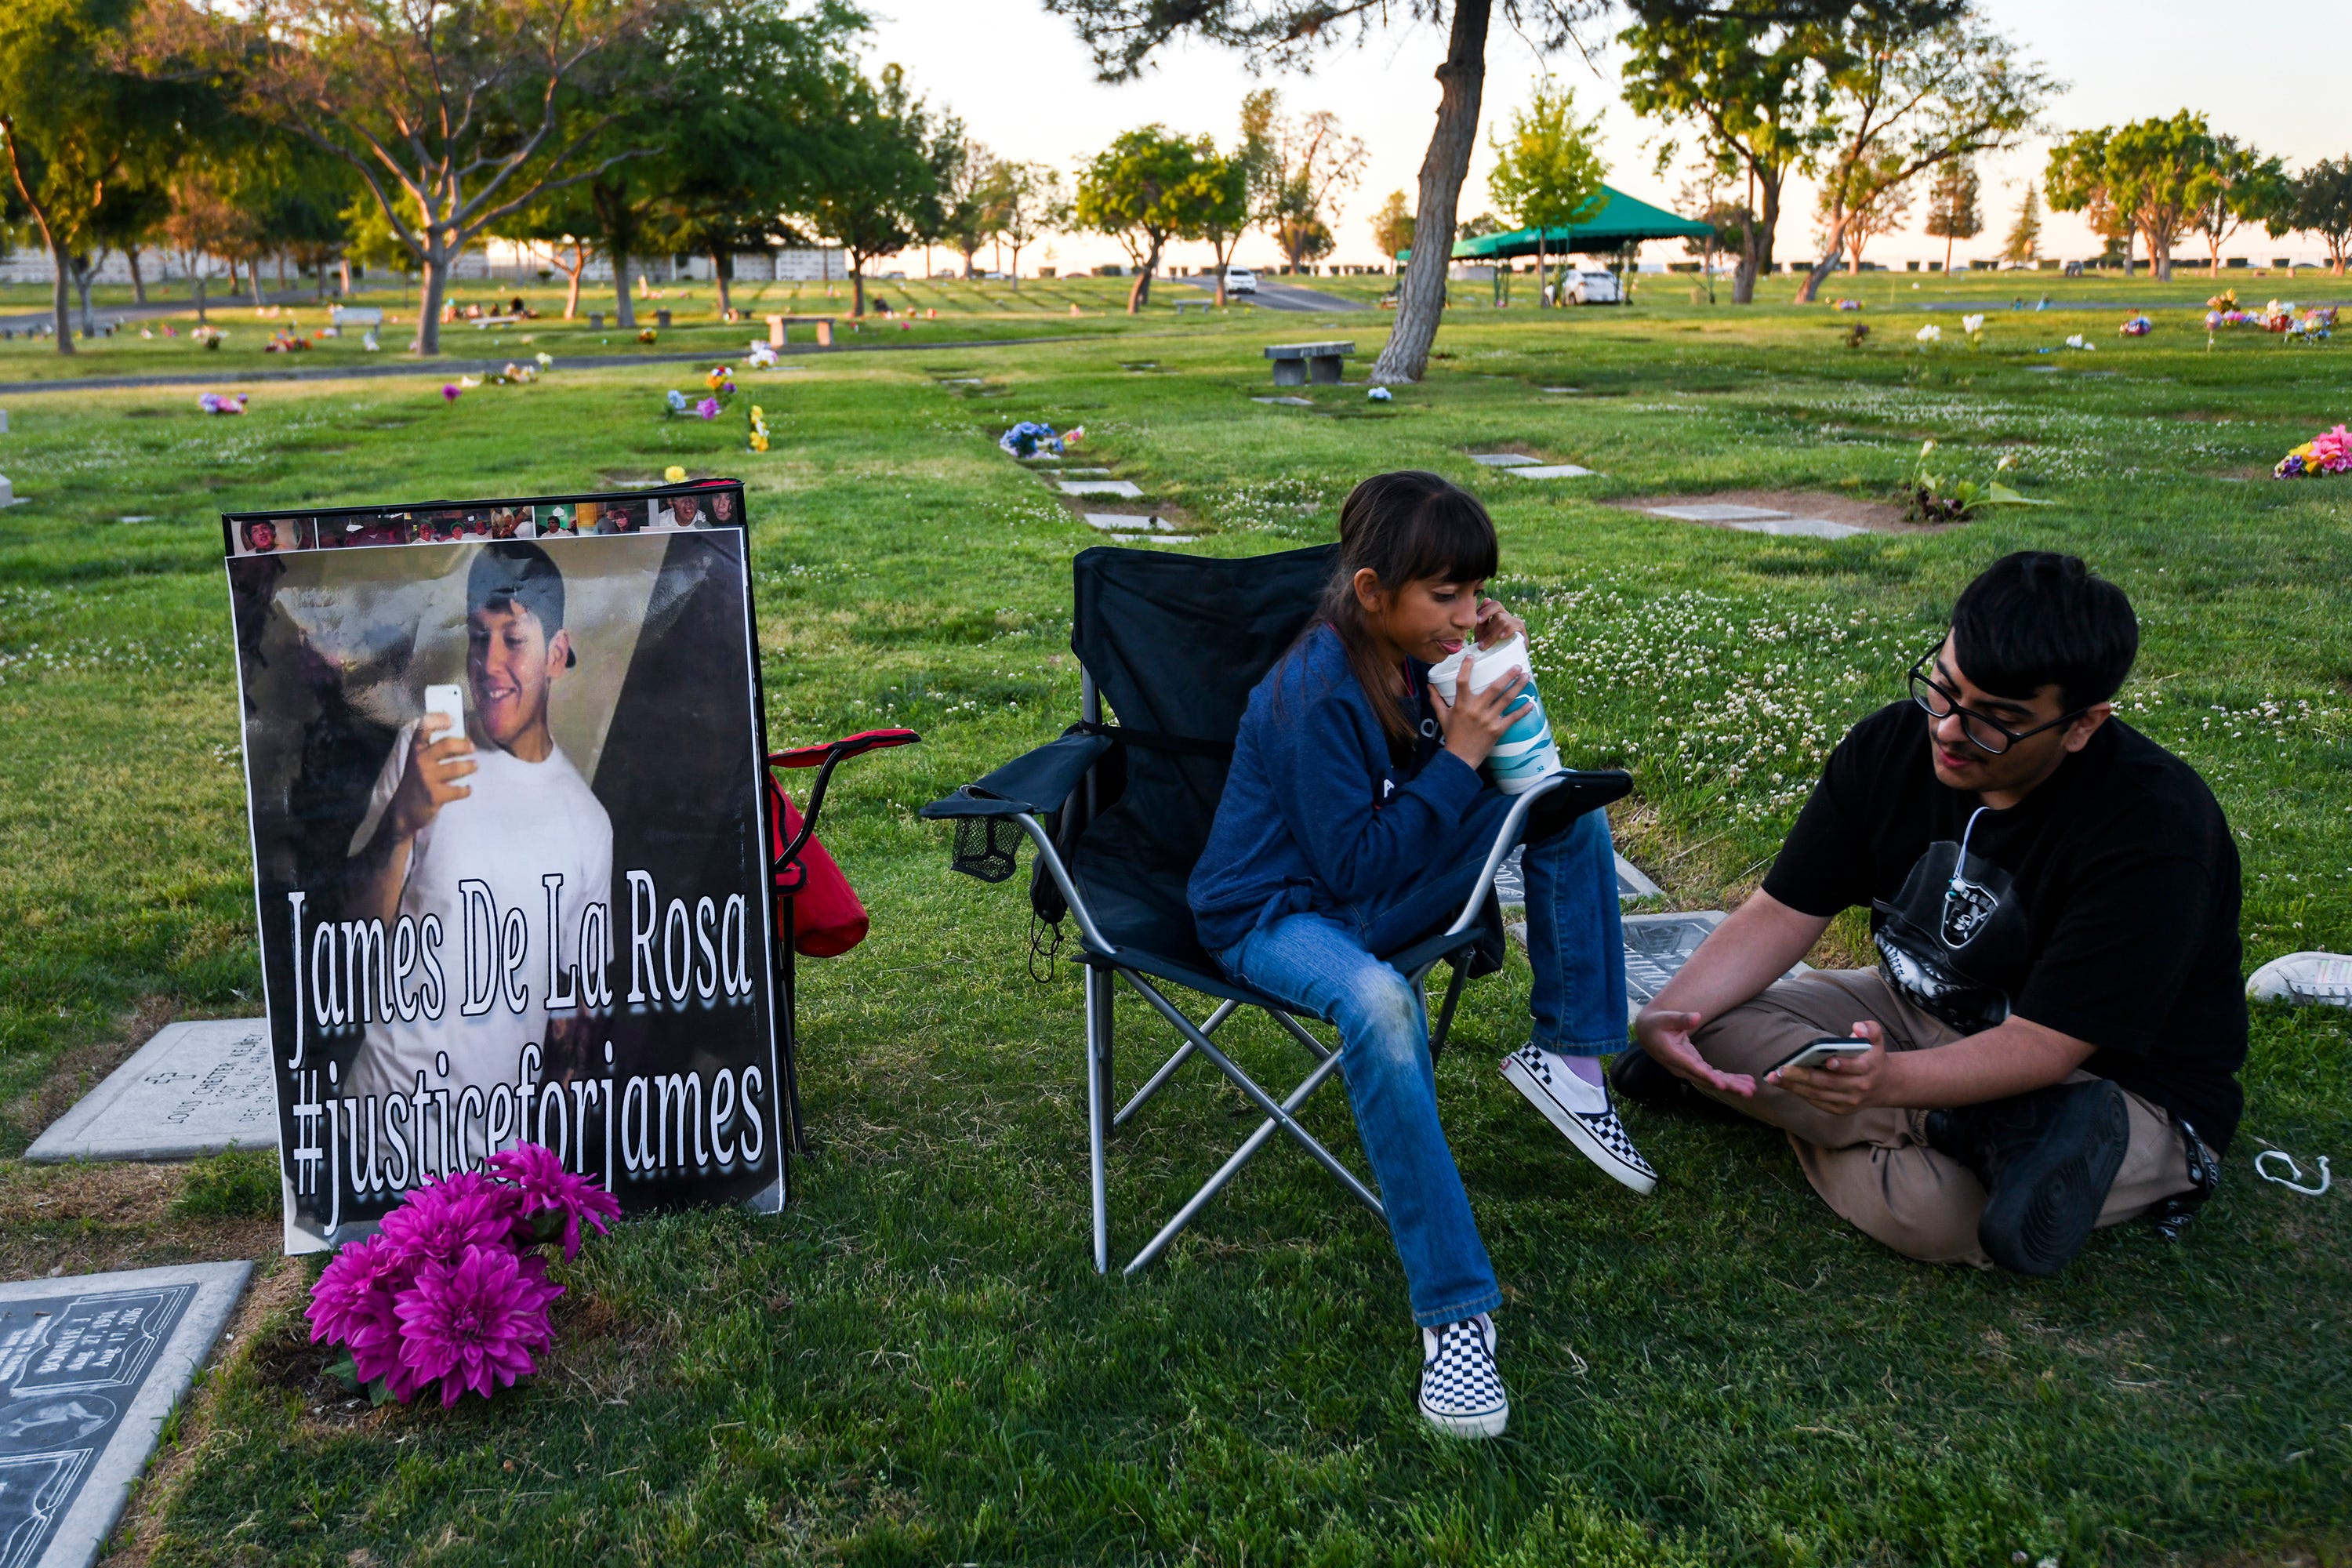 Leticia de la Rosa and her family spend the evening at Greenlawn Cemetery to celebrate the birthday of James de la Rosa.